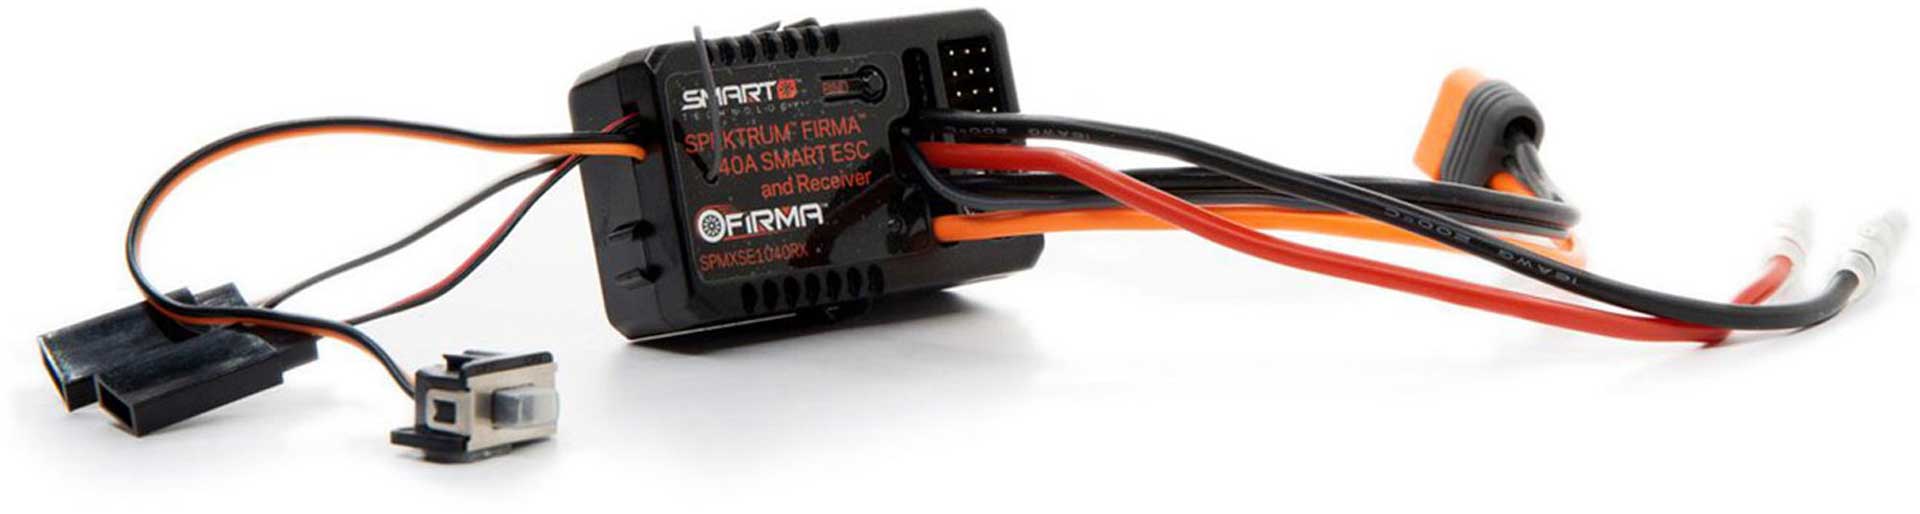 SPEKTRUM Firma 40 Amp Brushed Smart 2-in-1 ESC et récepteur